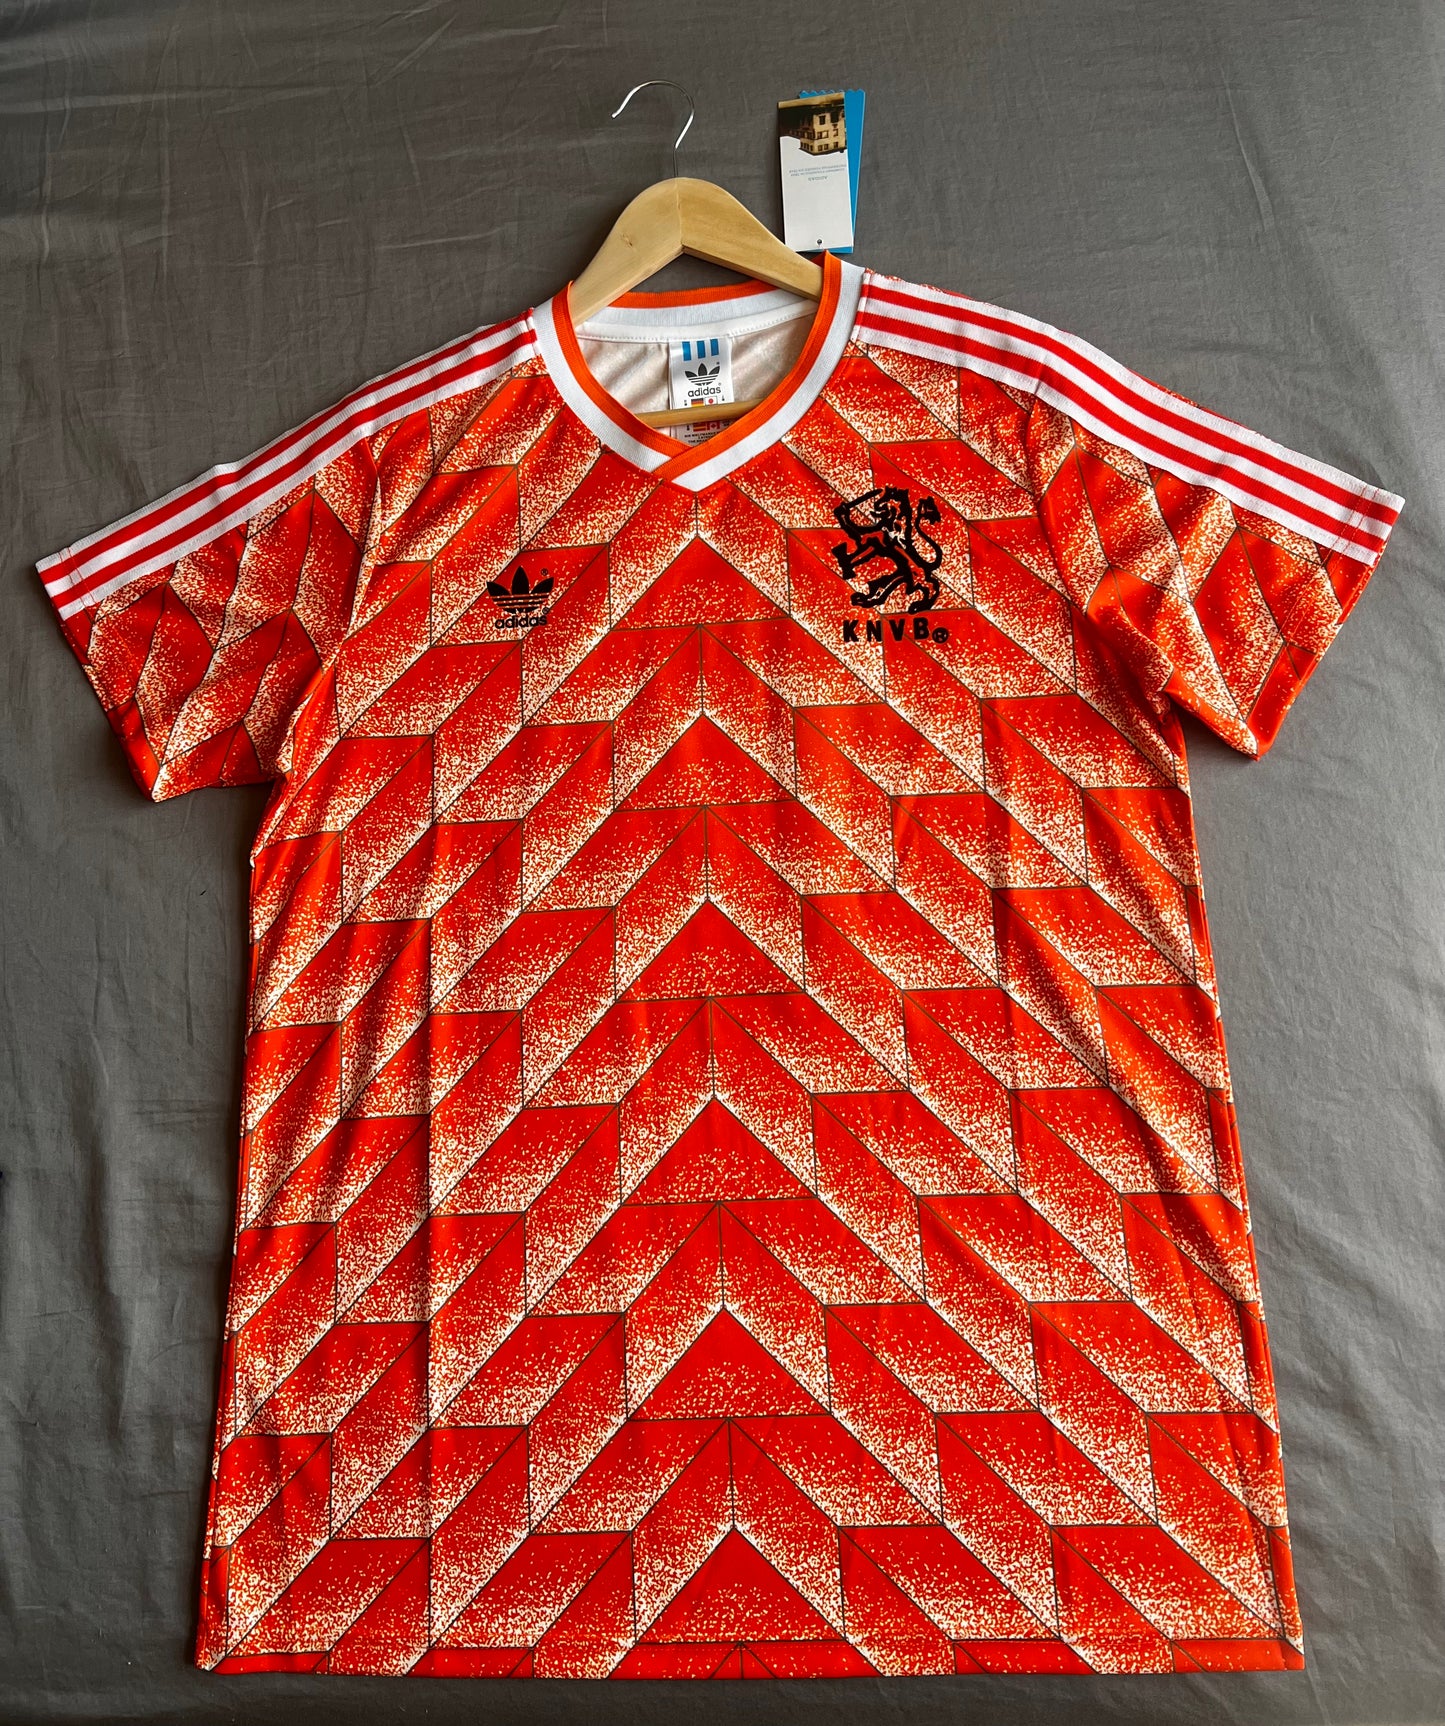 Netherlands 1988 Home jersey